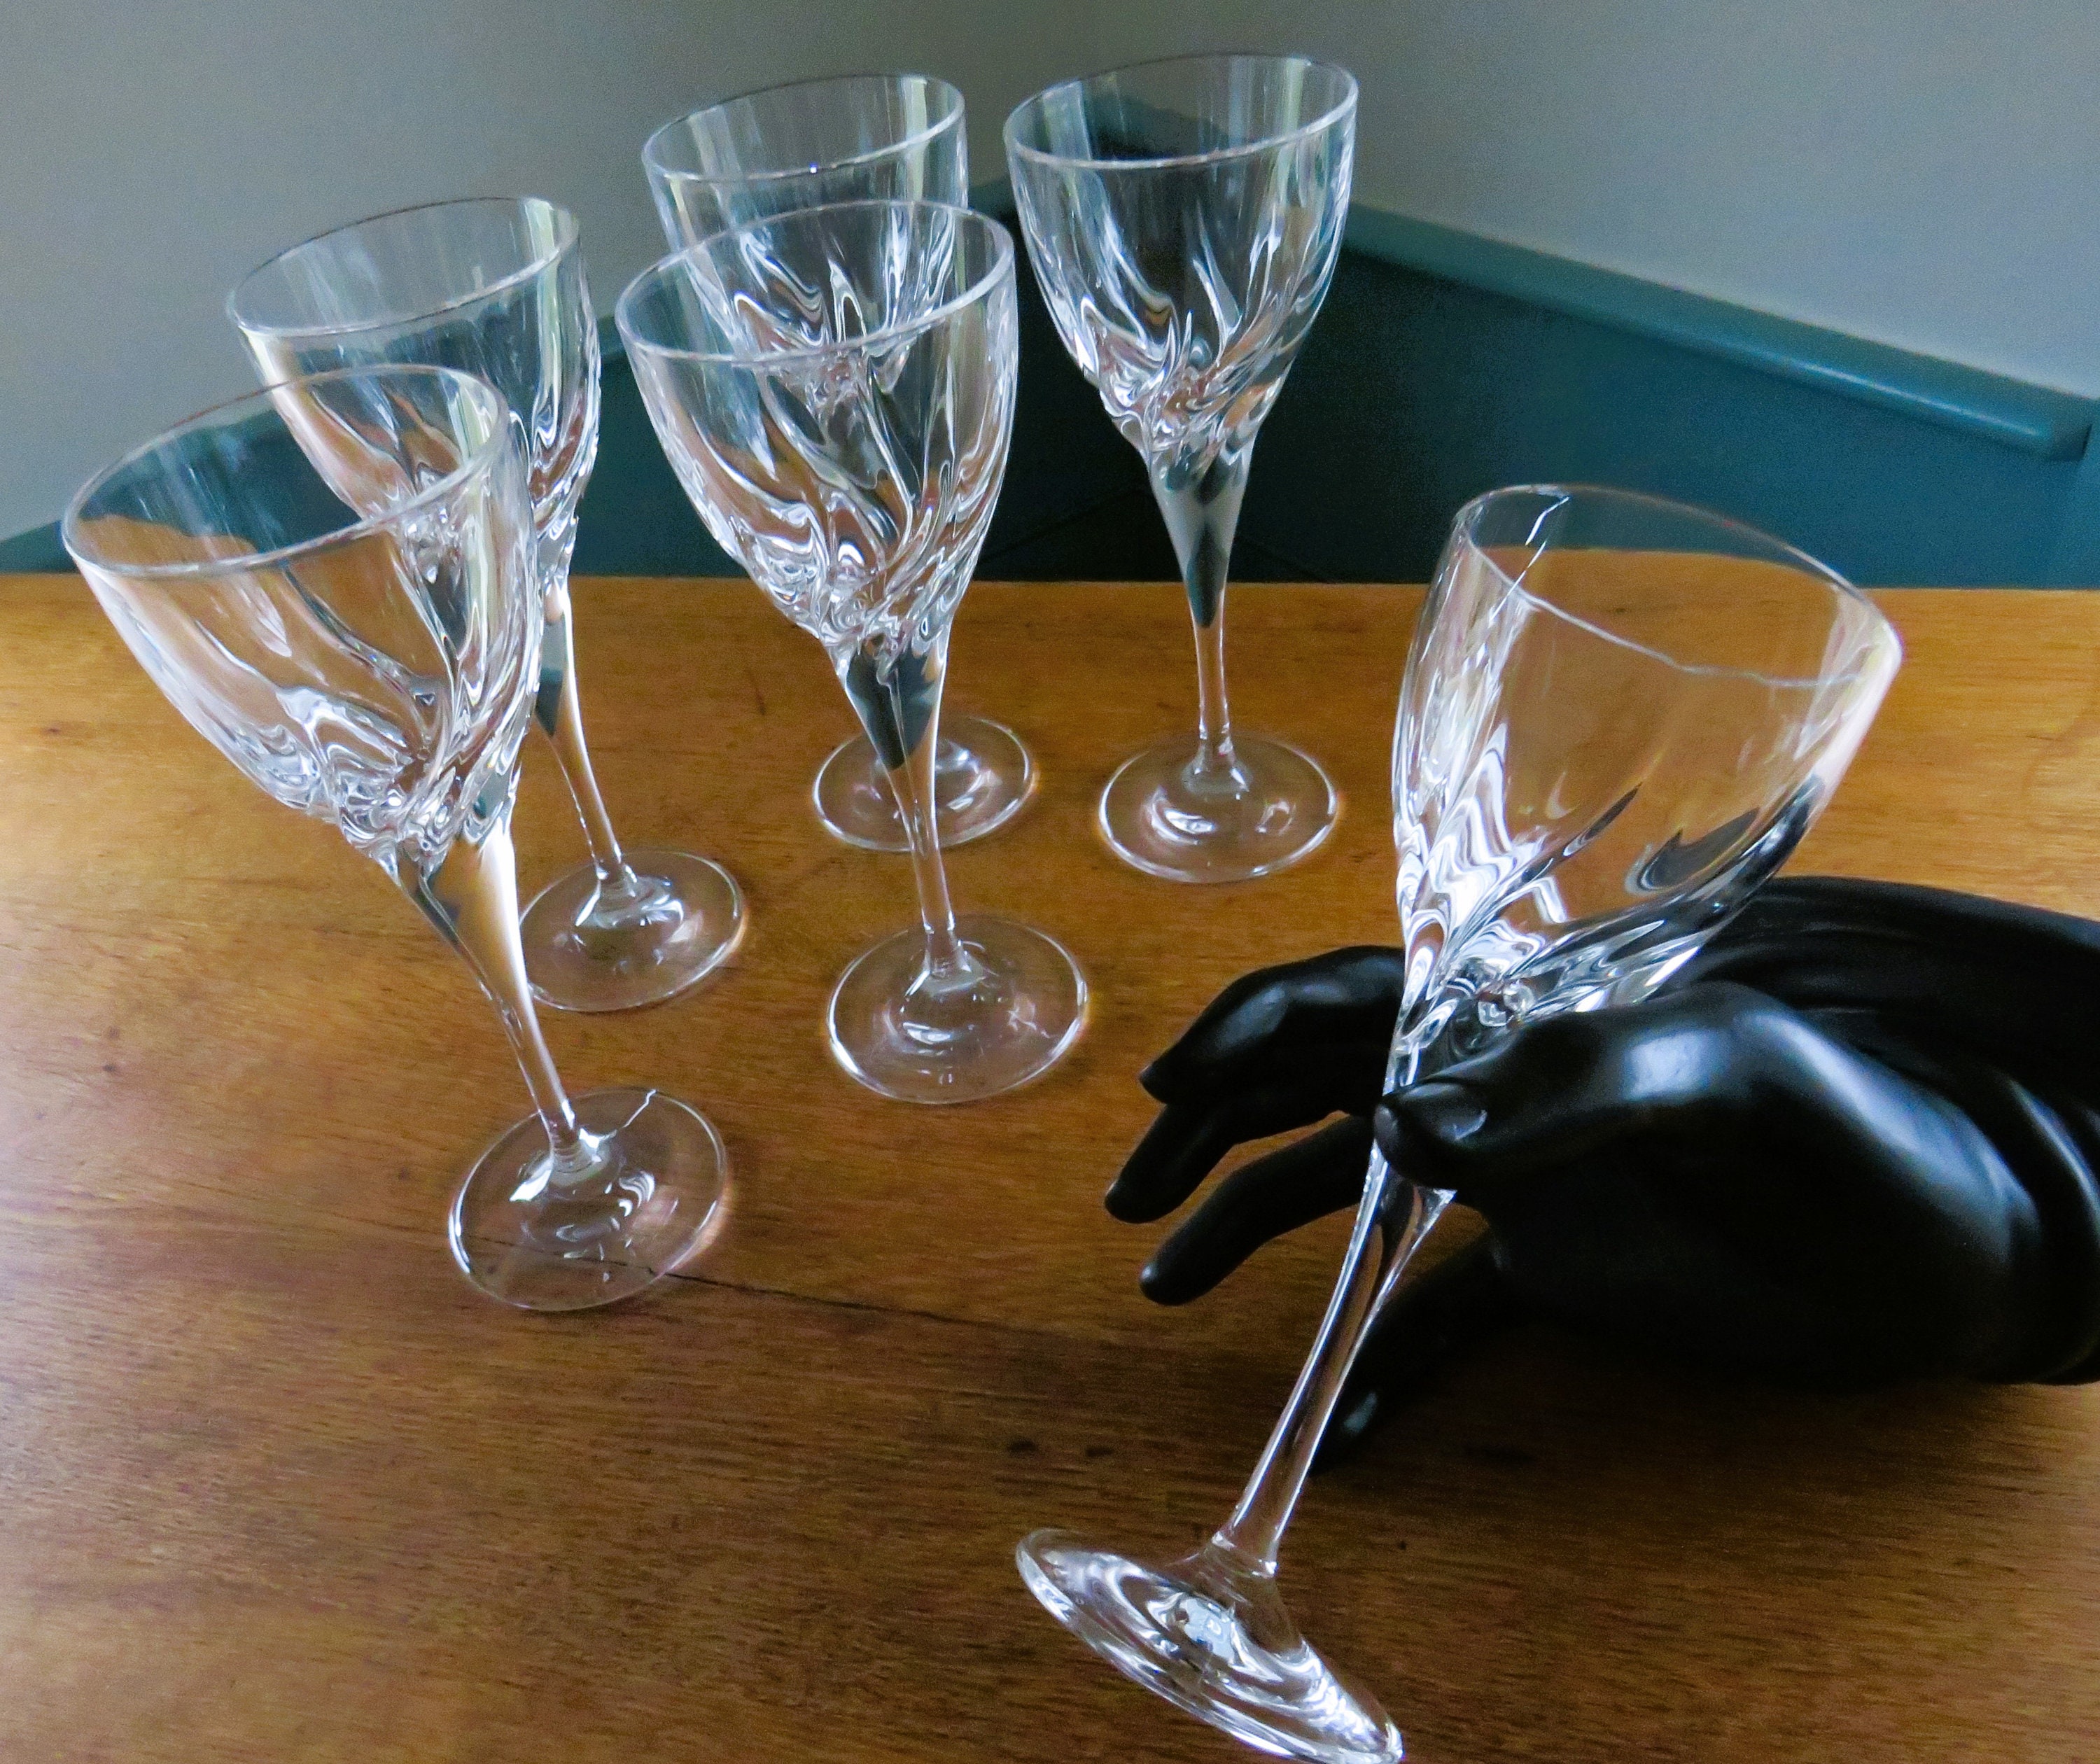 RCR Simple Wine Glass - 2 Sizes - ApolloBox